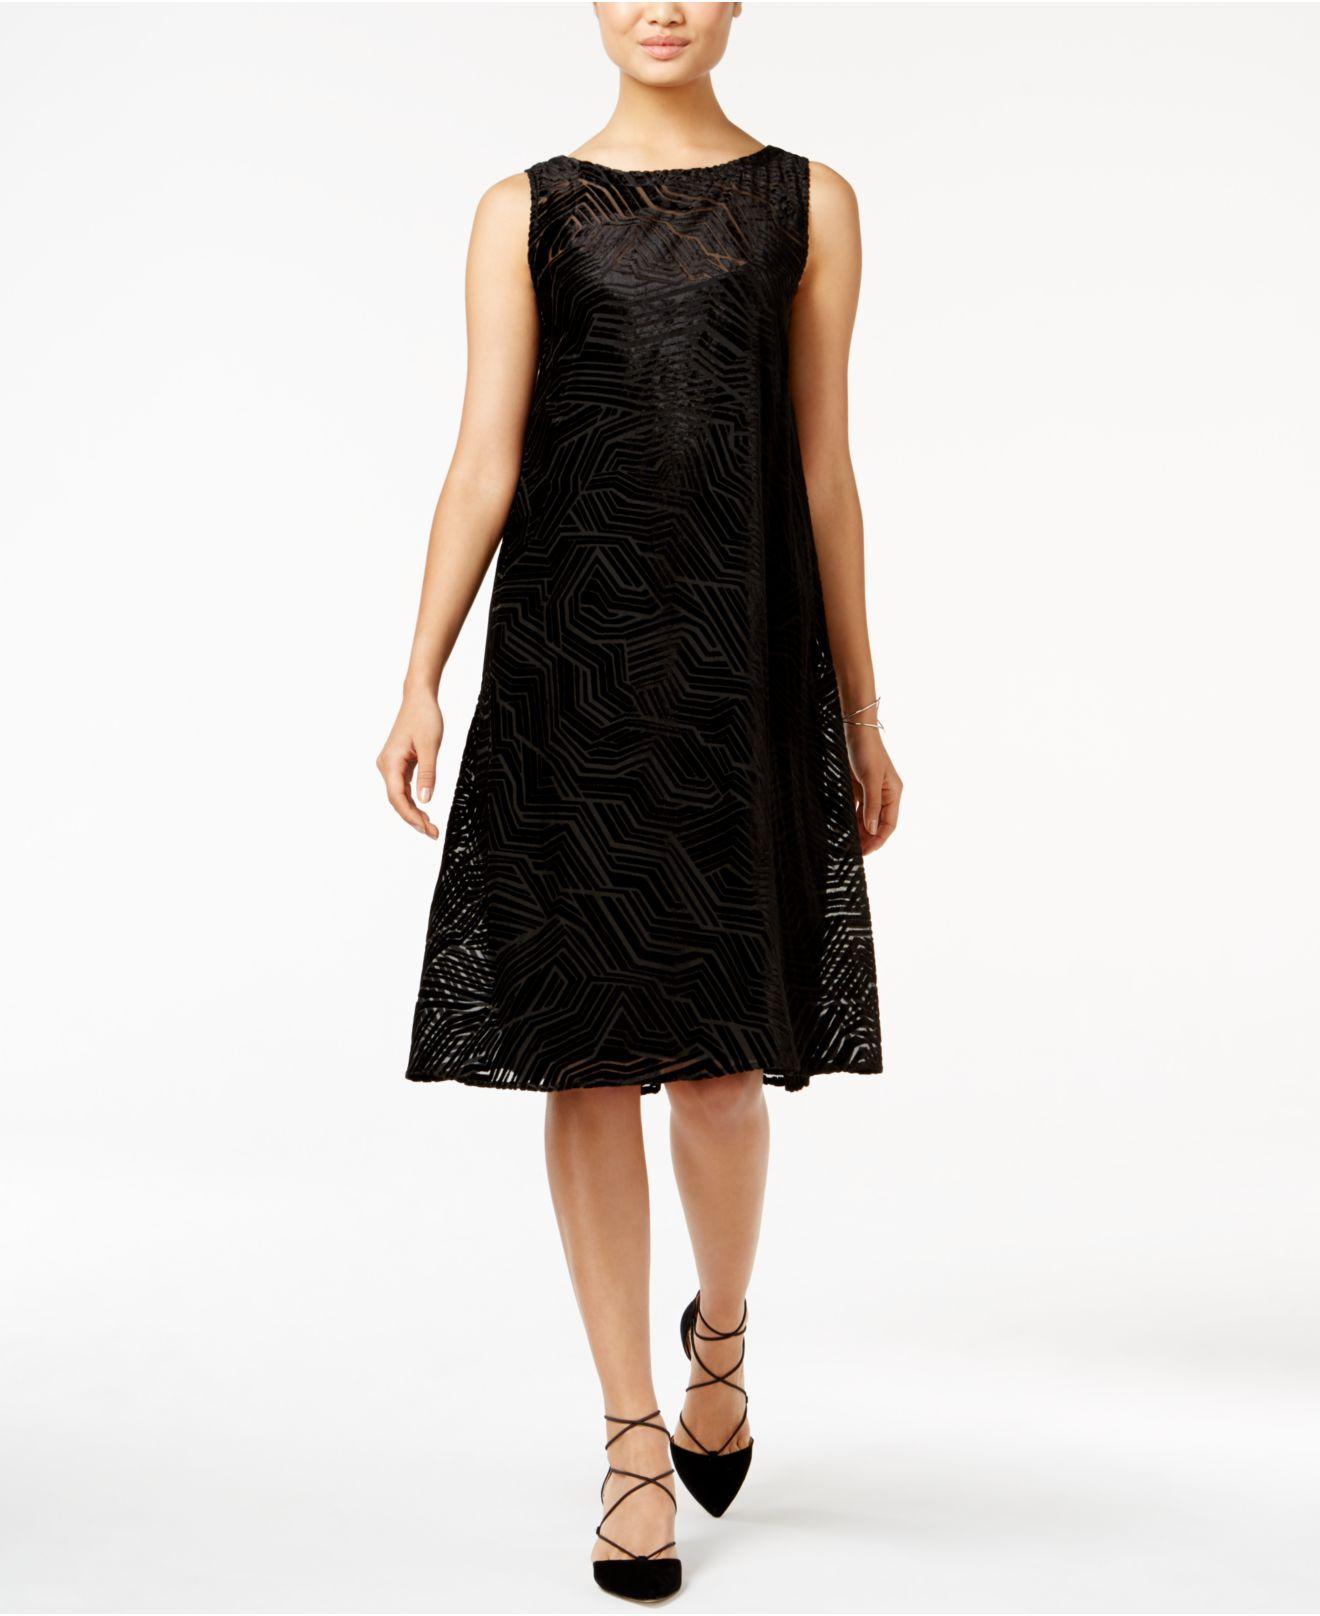 Lyst - Alfani Velvet Burnout A-line Dress in Black